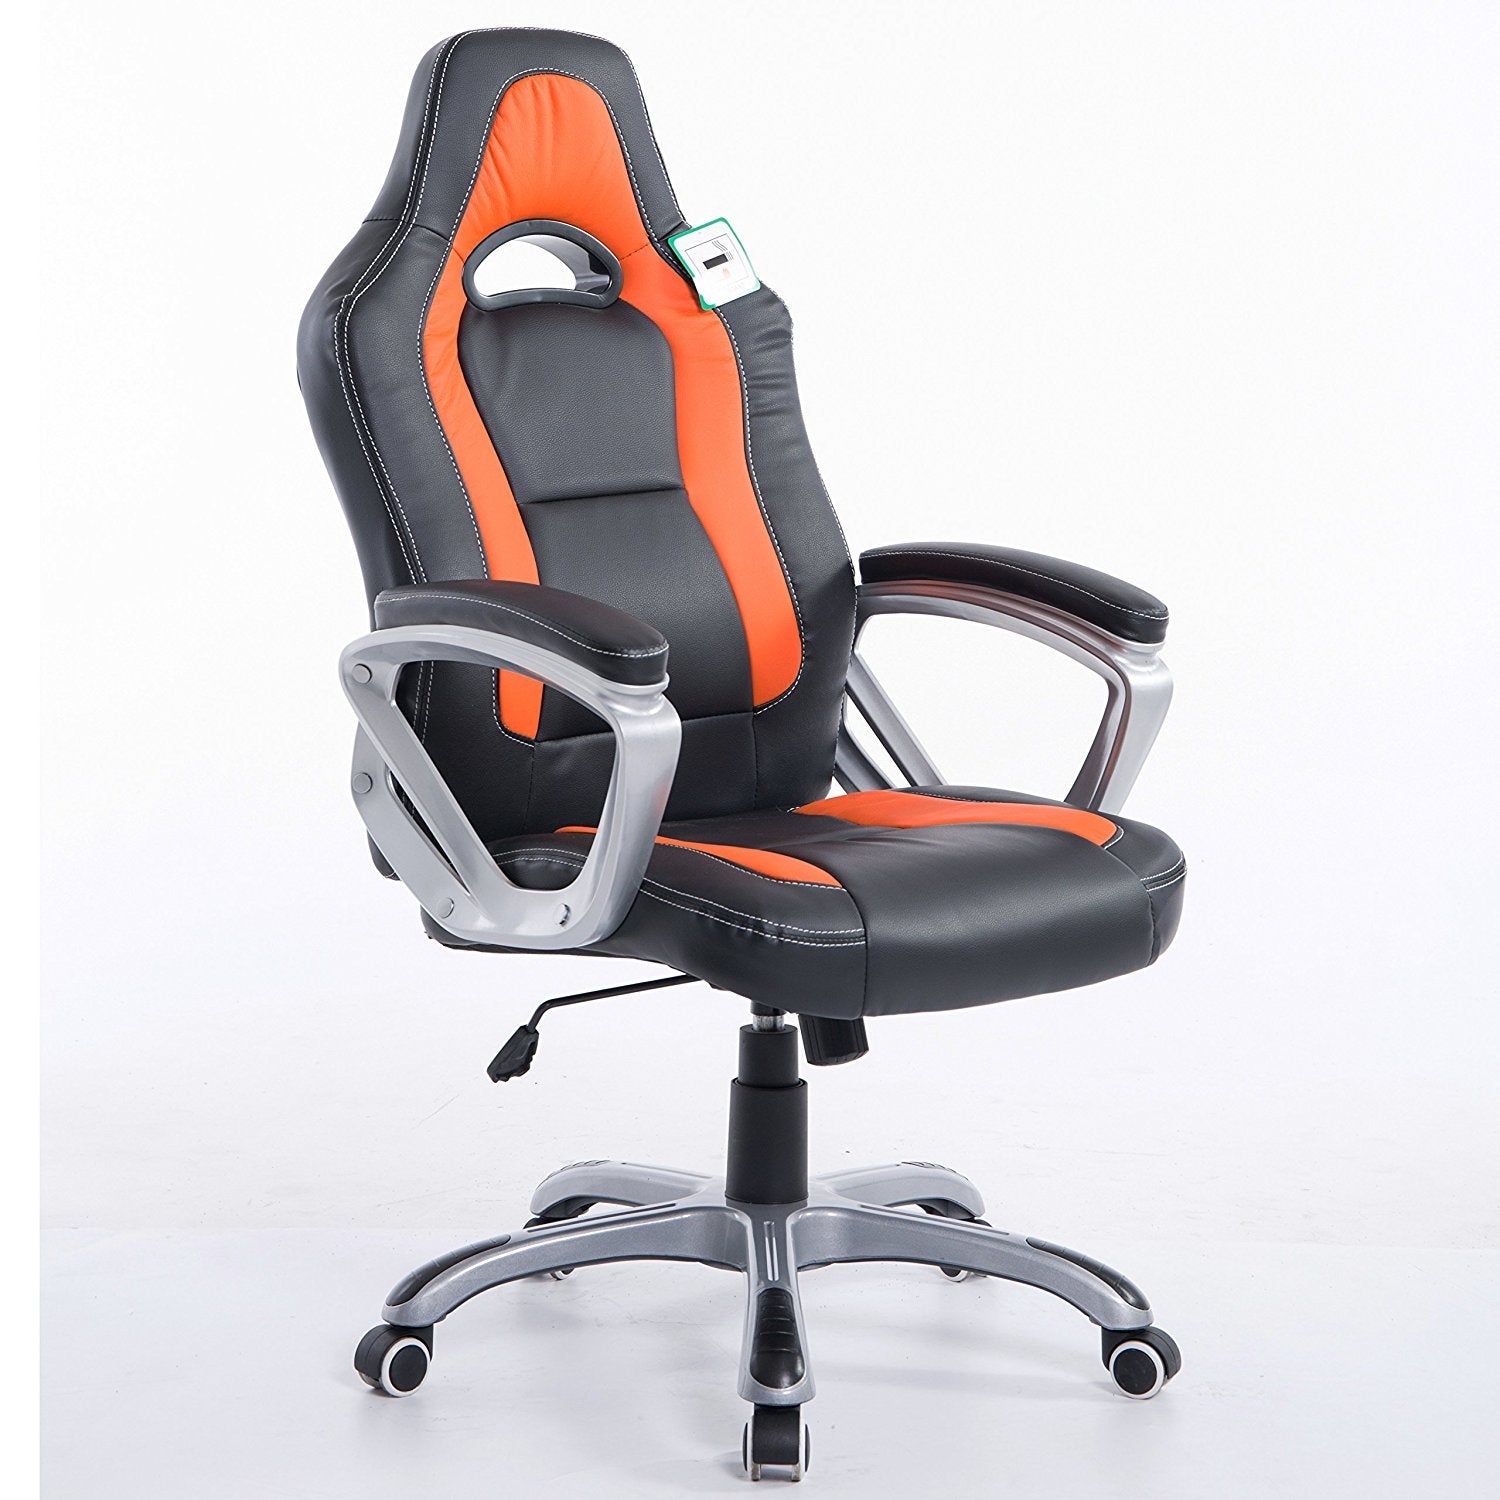 DaAls Racing Sport Swivel Office Chair in Black & Orange